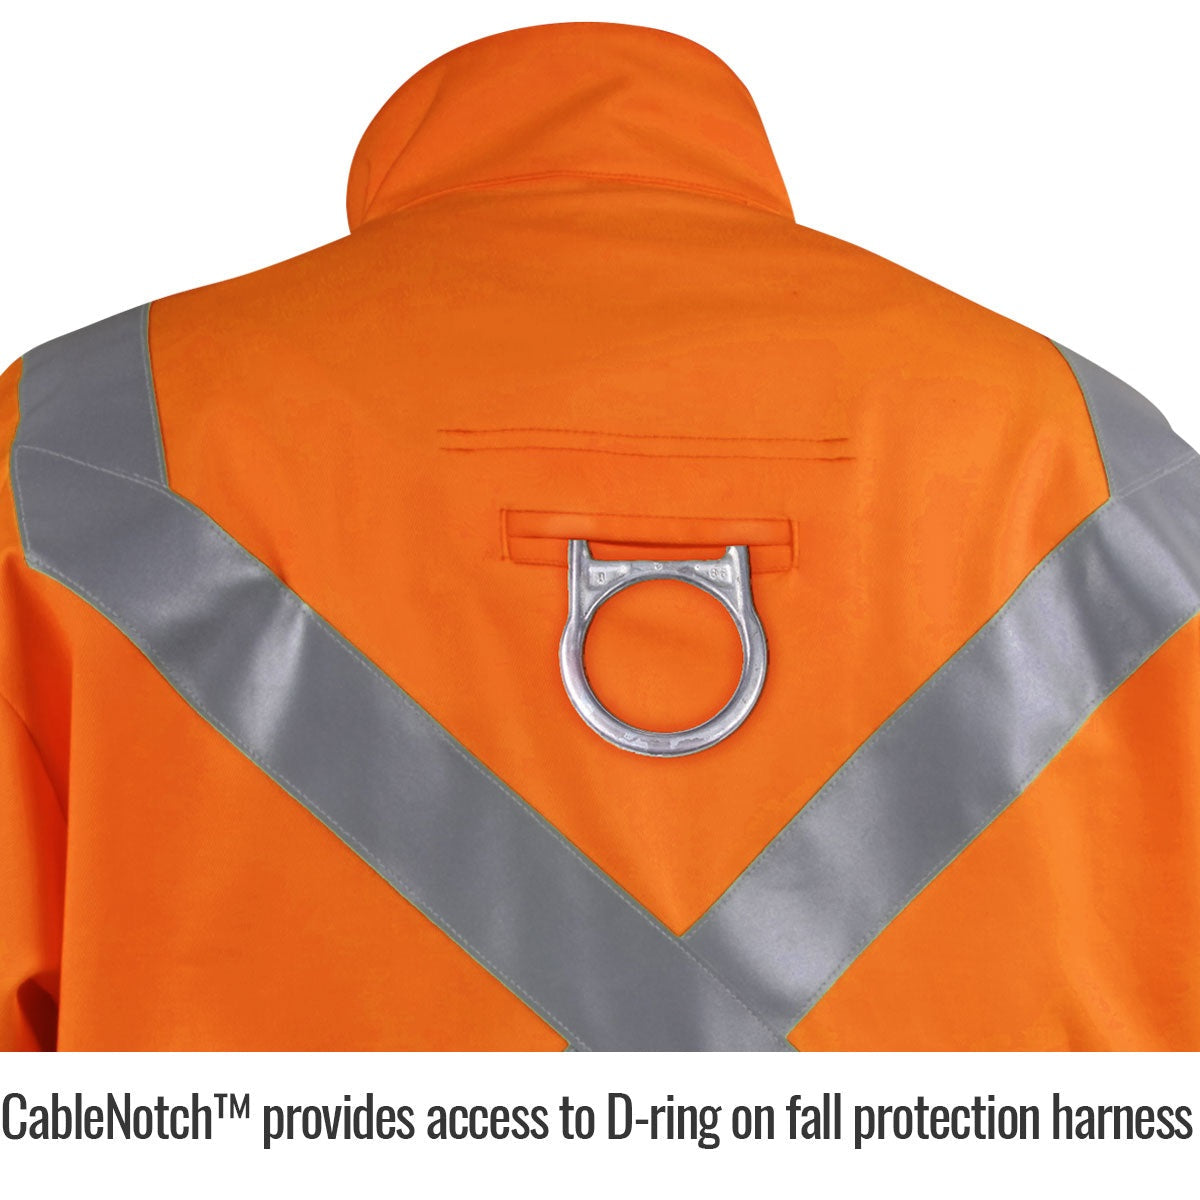 Revco Black Stallion 9oz Orange Safety Welding Jacket w/FR Reflective Tape (JF1012-OR)